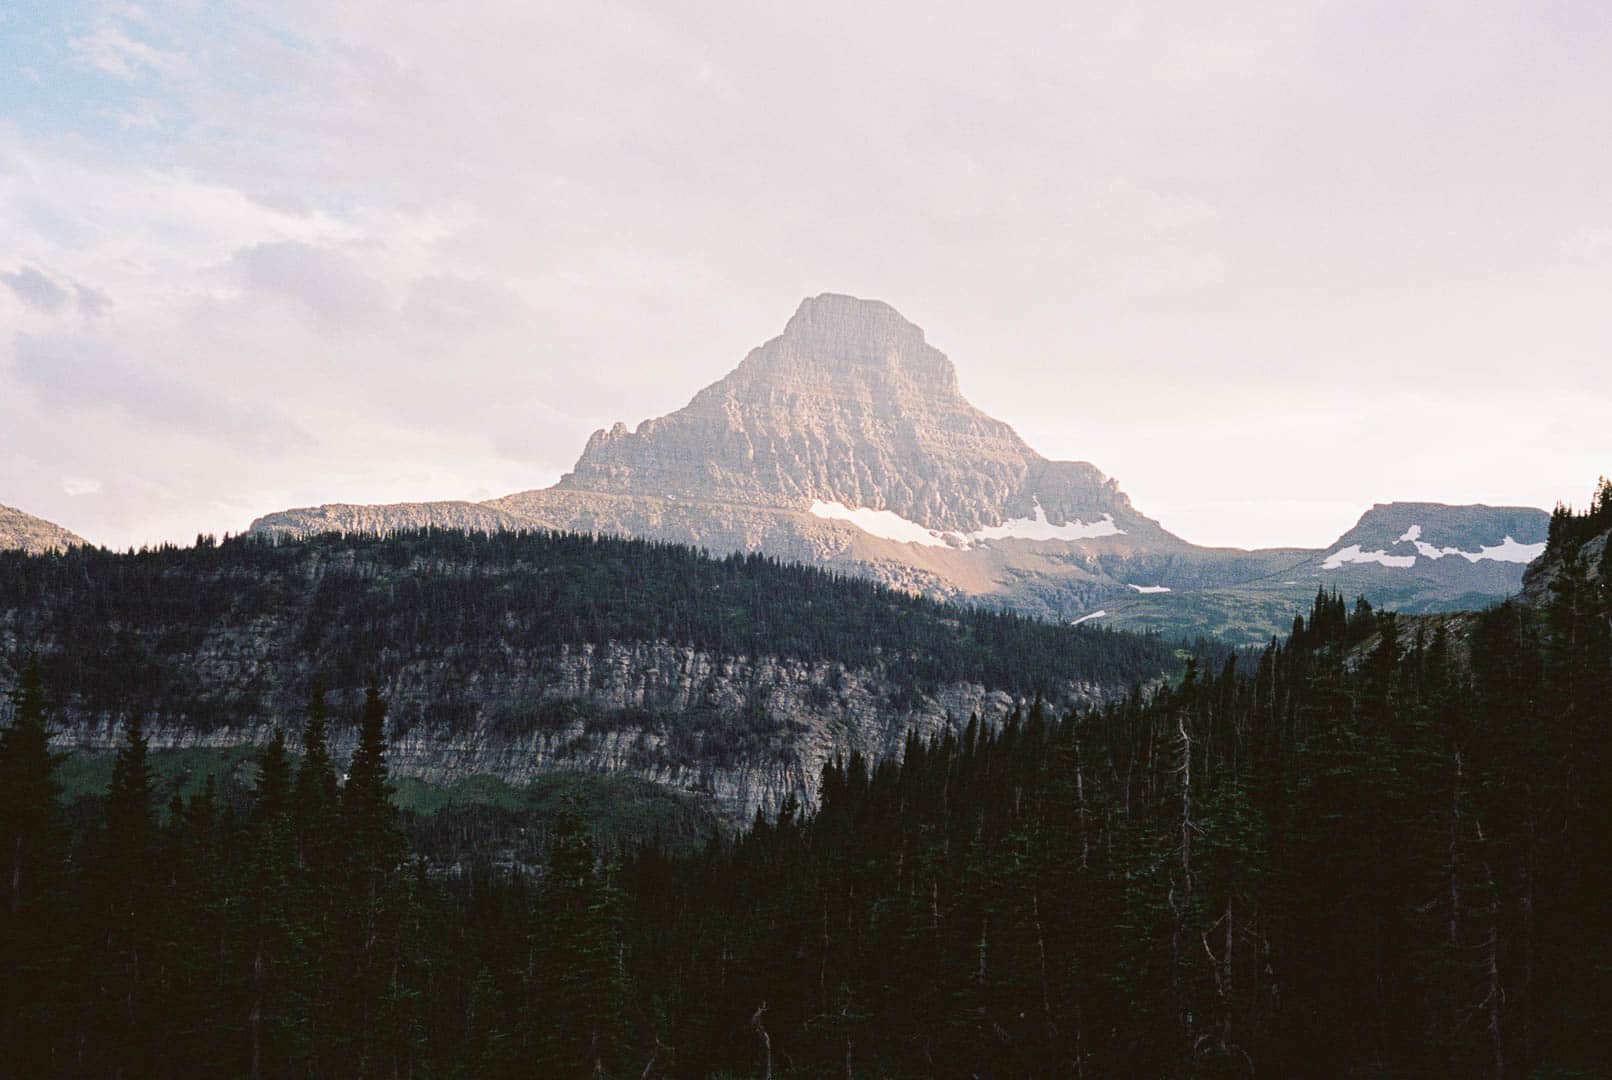 A rocky mountian peak sticking above treelined mountians